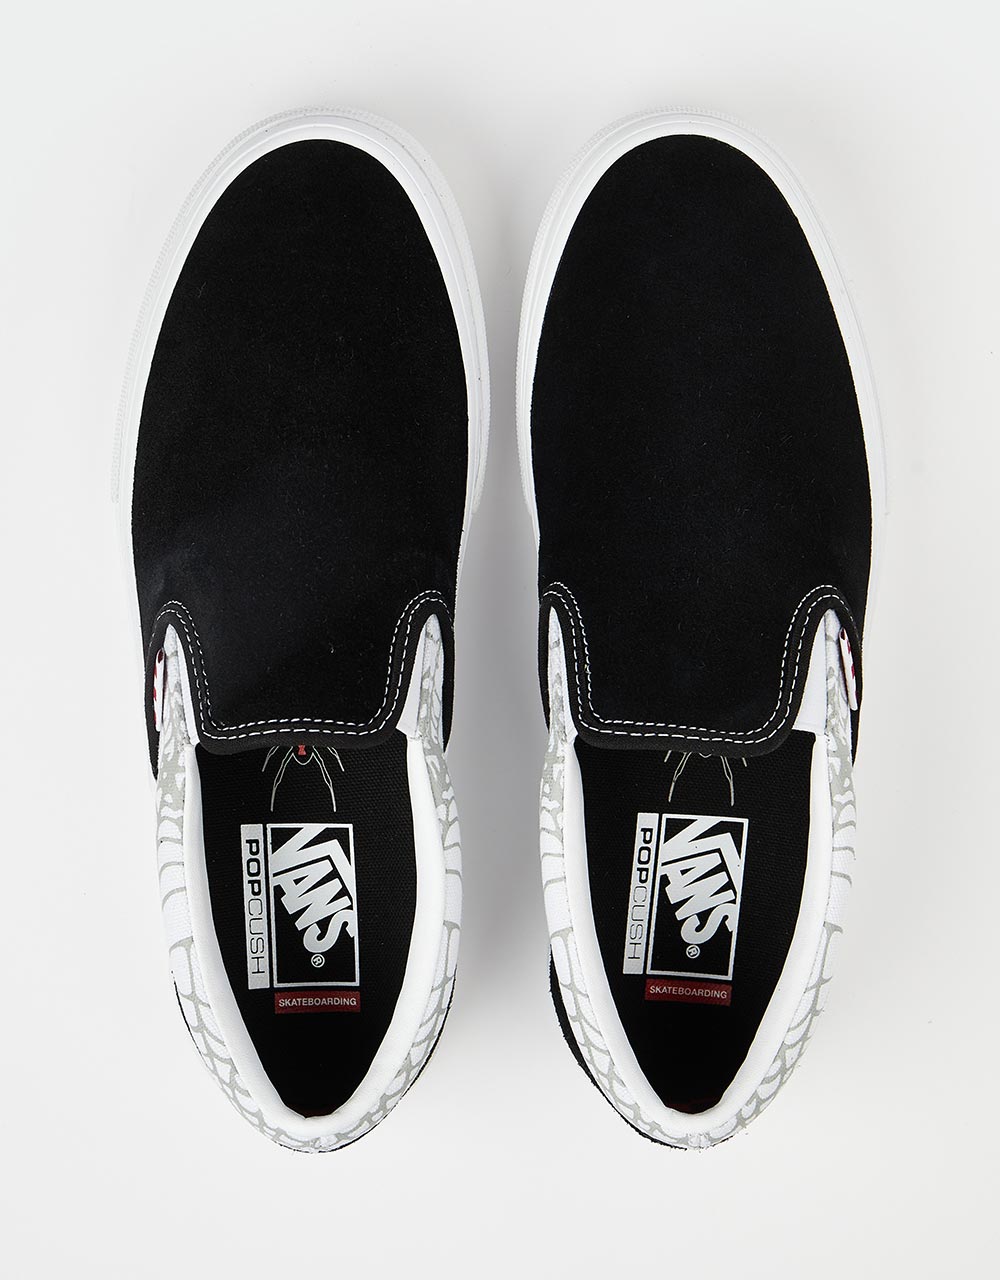 Vans Skate Slip On Shoes - (Black Widow) Black/White/Red